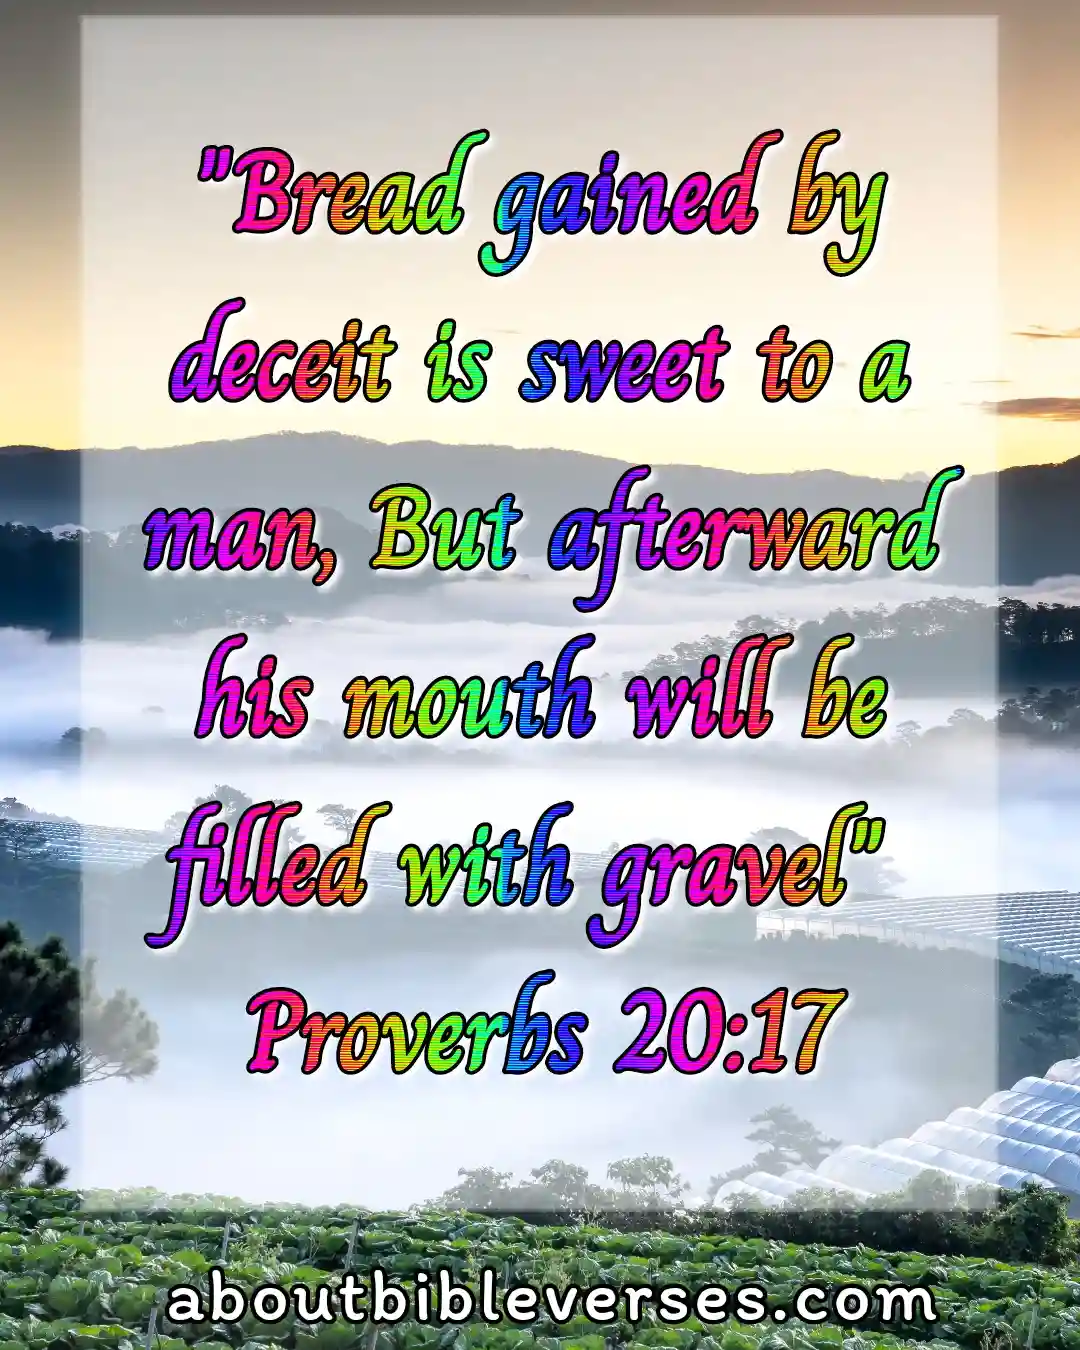 today bible verse (Proverbs 20:17)